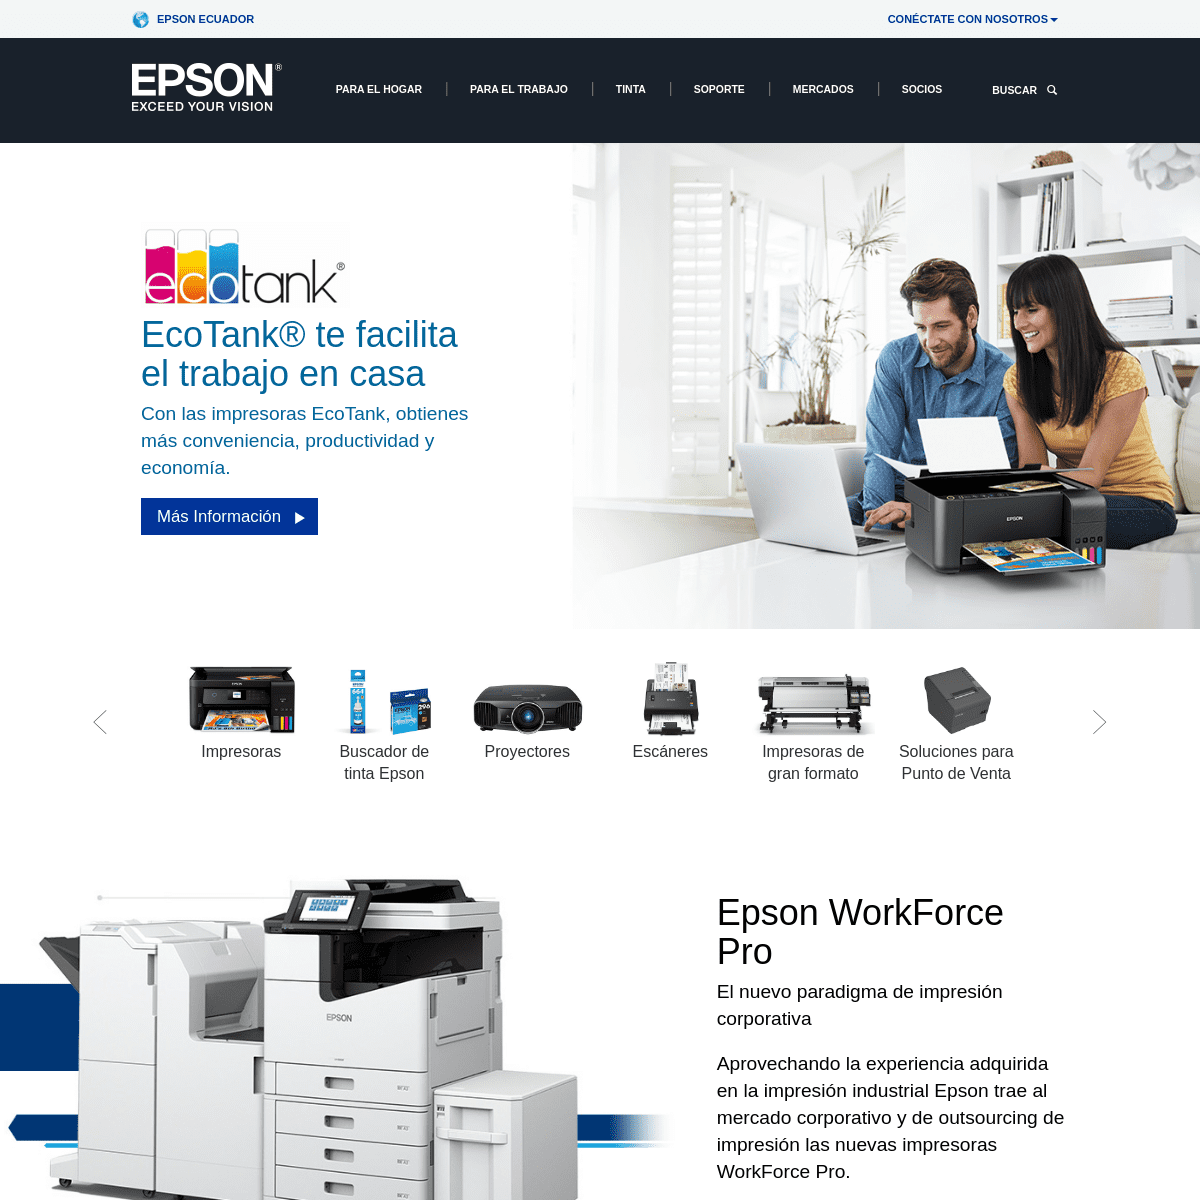 A complete backup of epson.com.ec